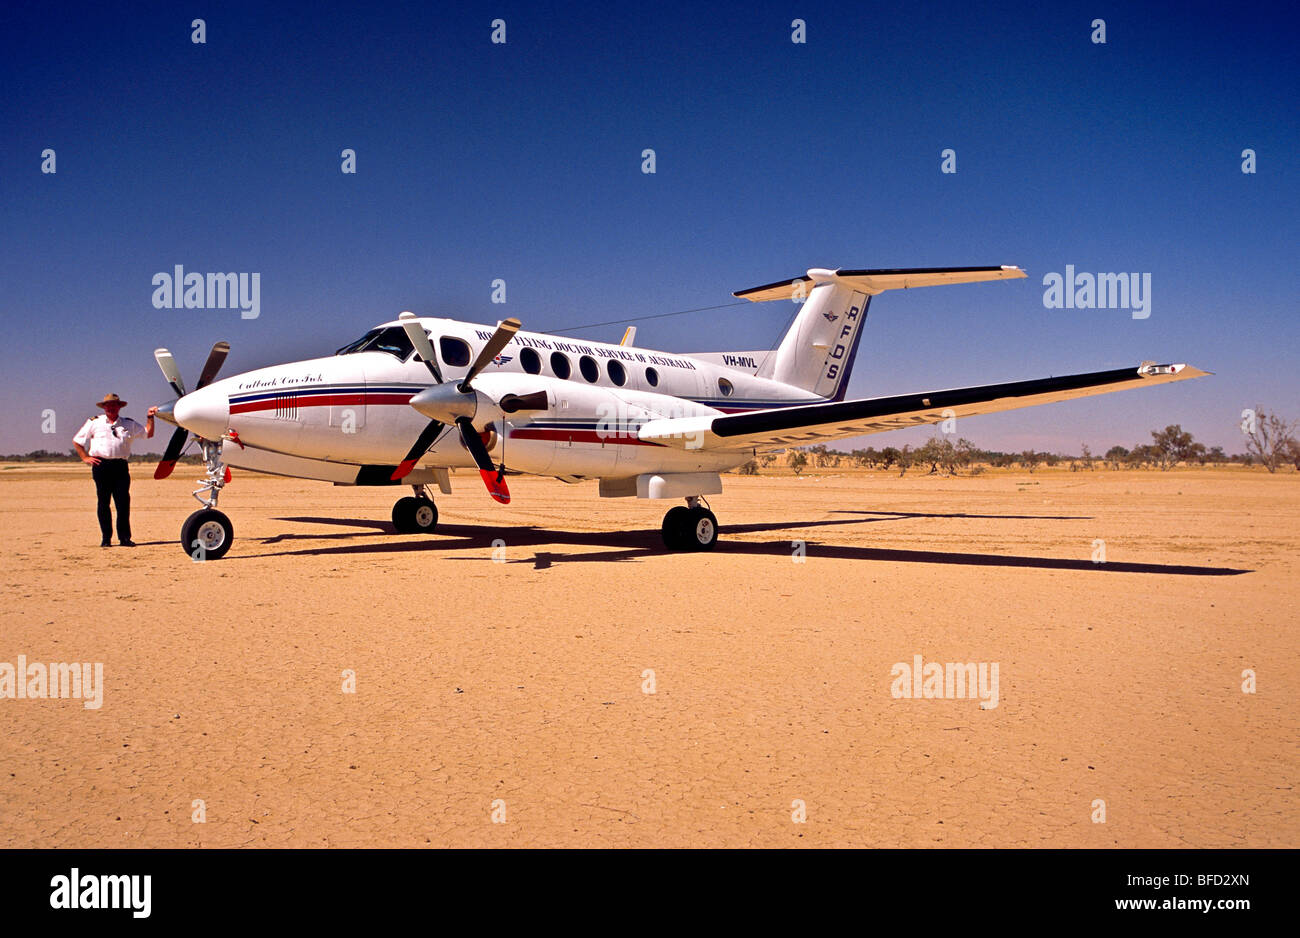 Royal Flying Doctor Service plane, Australia Stock Photo - Alamy